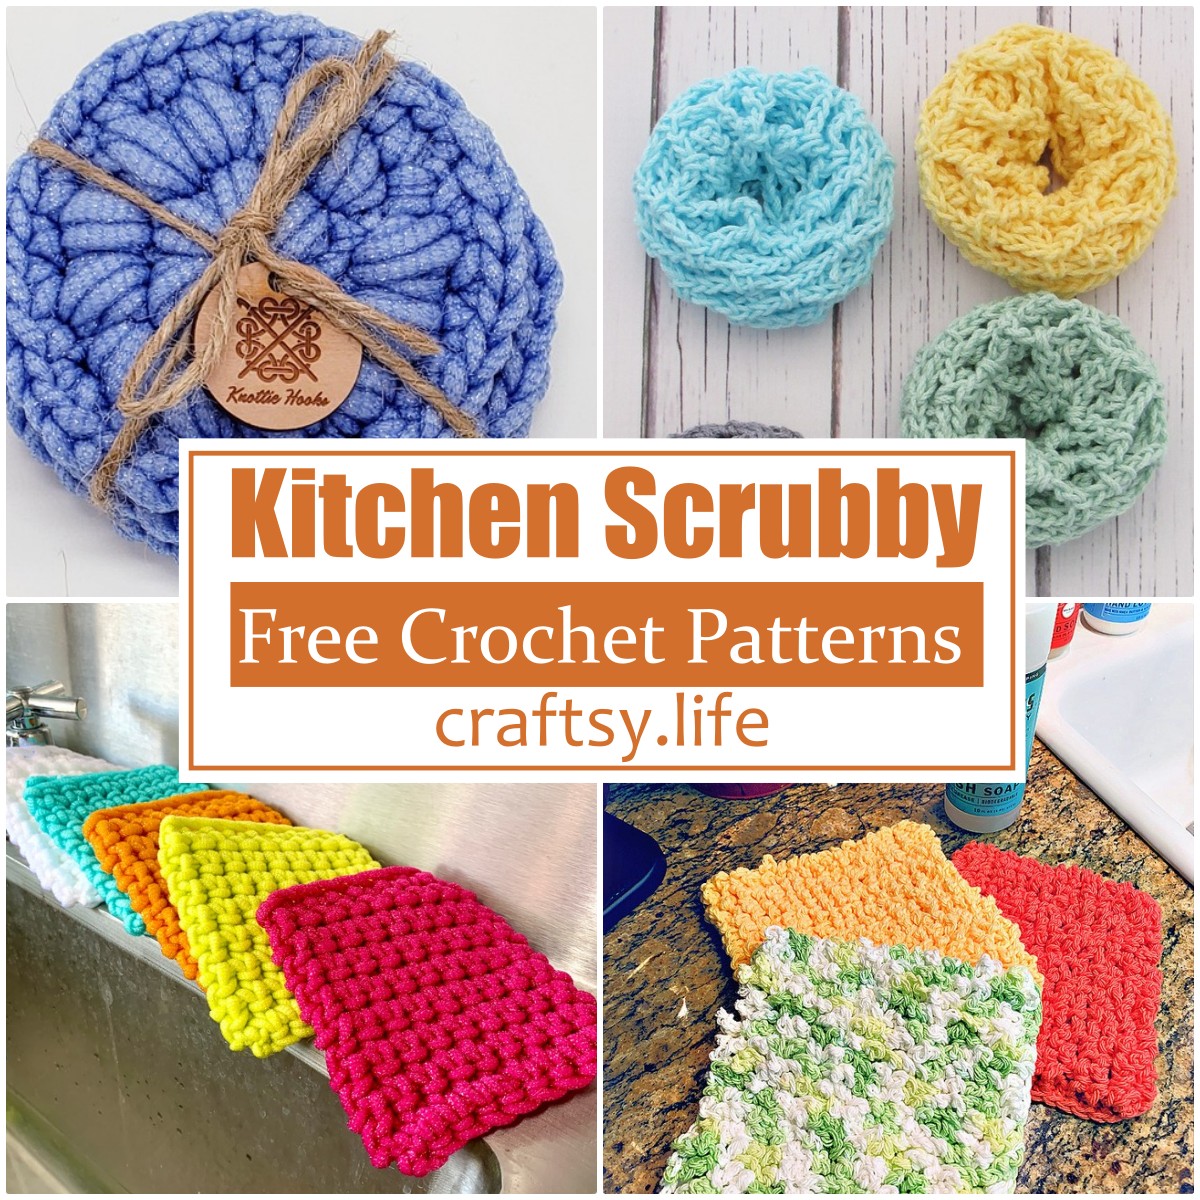 Crochet Kitchen Scrubby Patterns